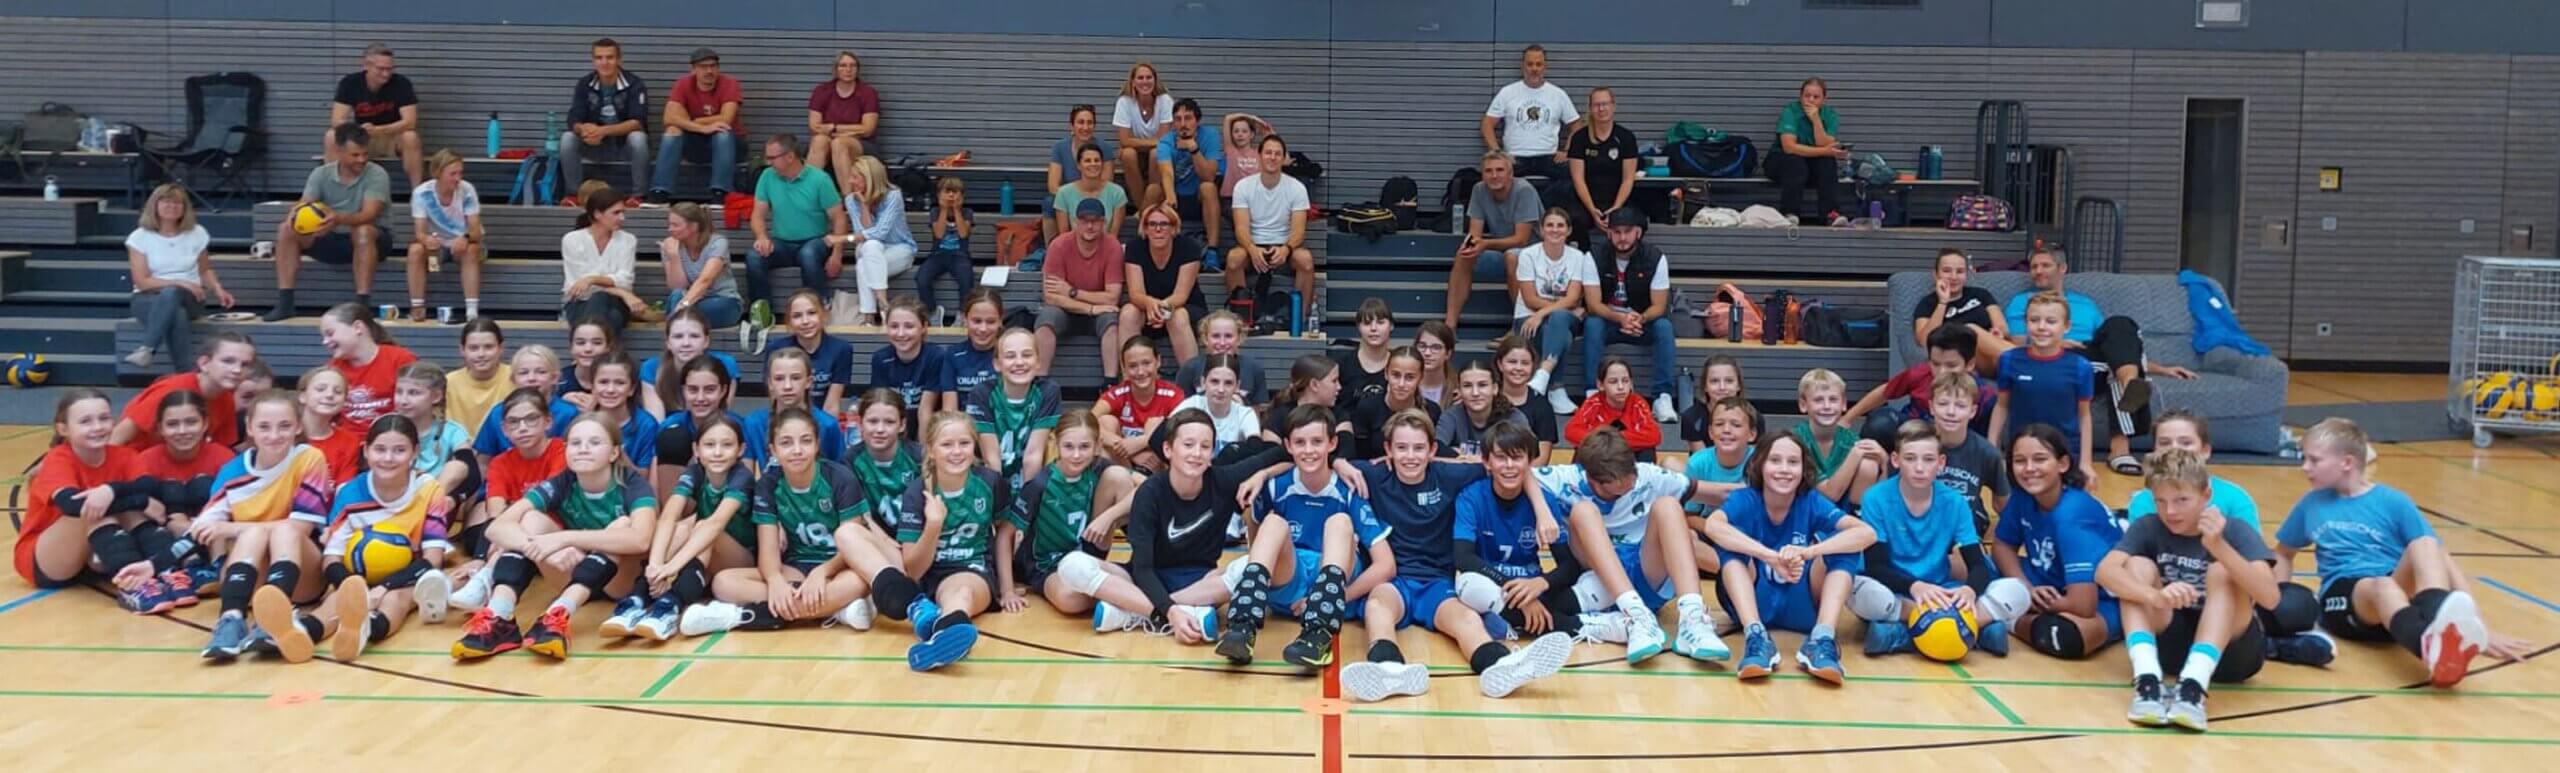 Volley Kids Day in Donauwörth